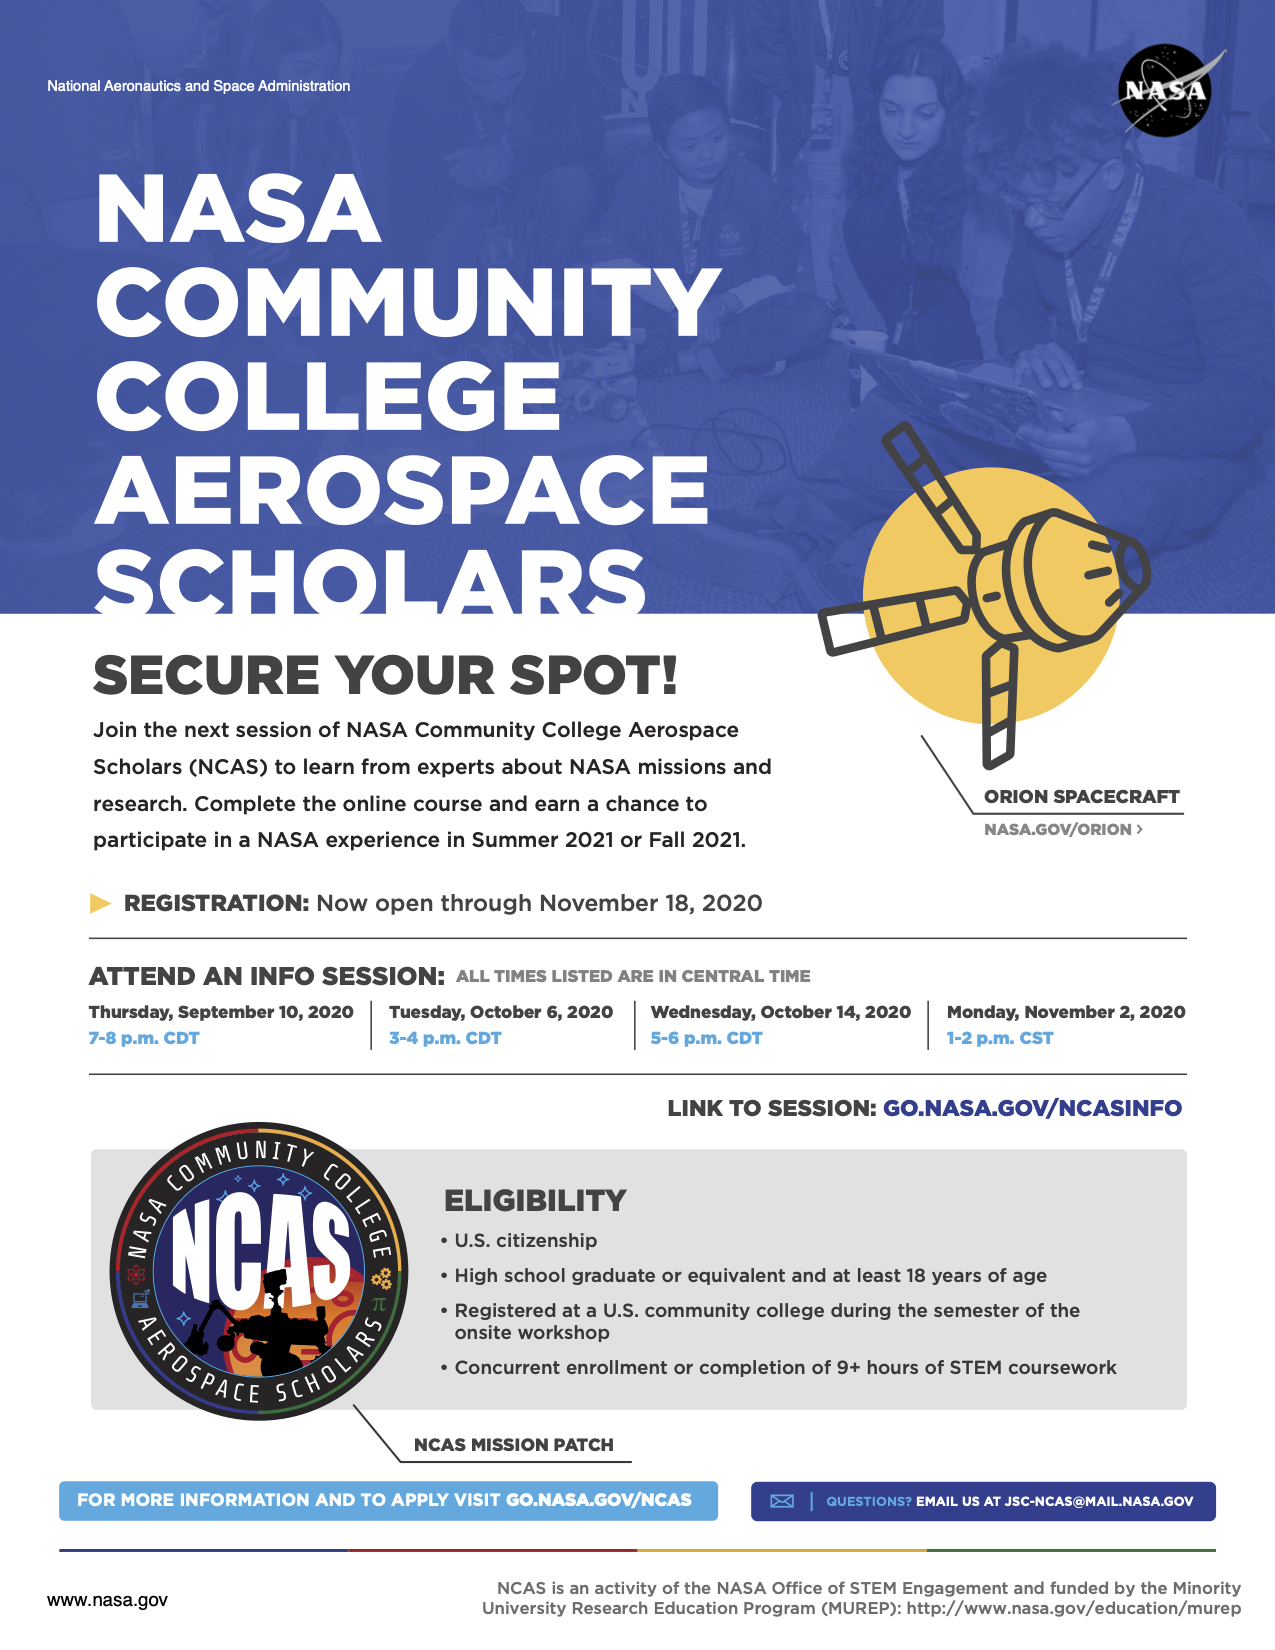 NASA community college aerospace scholars information poster